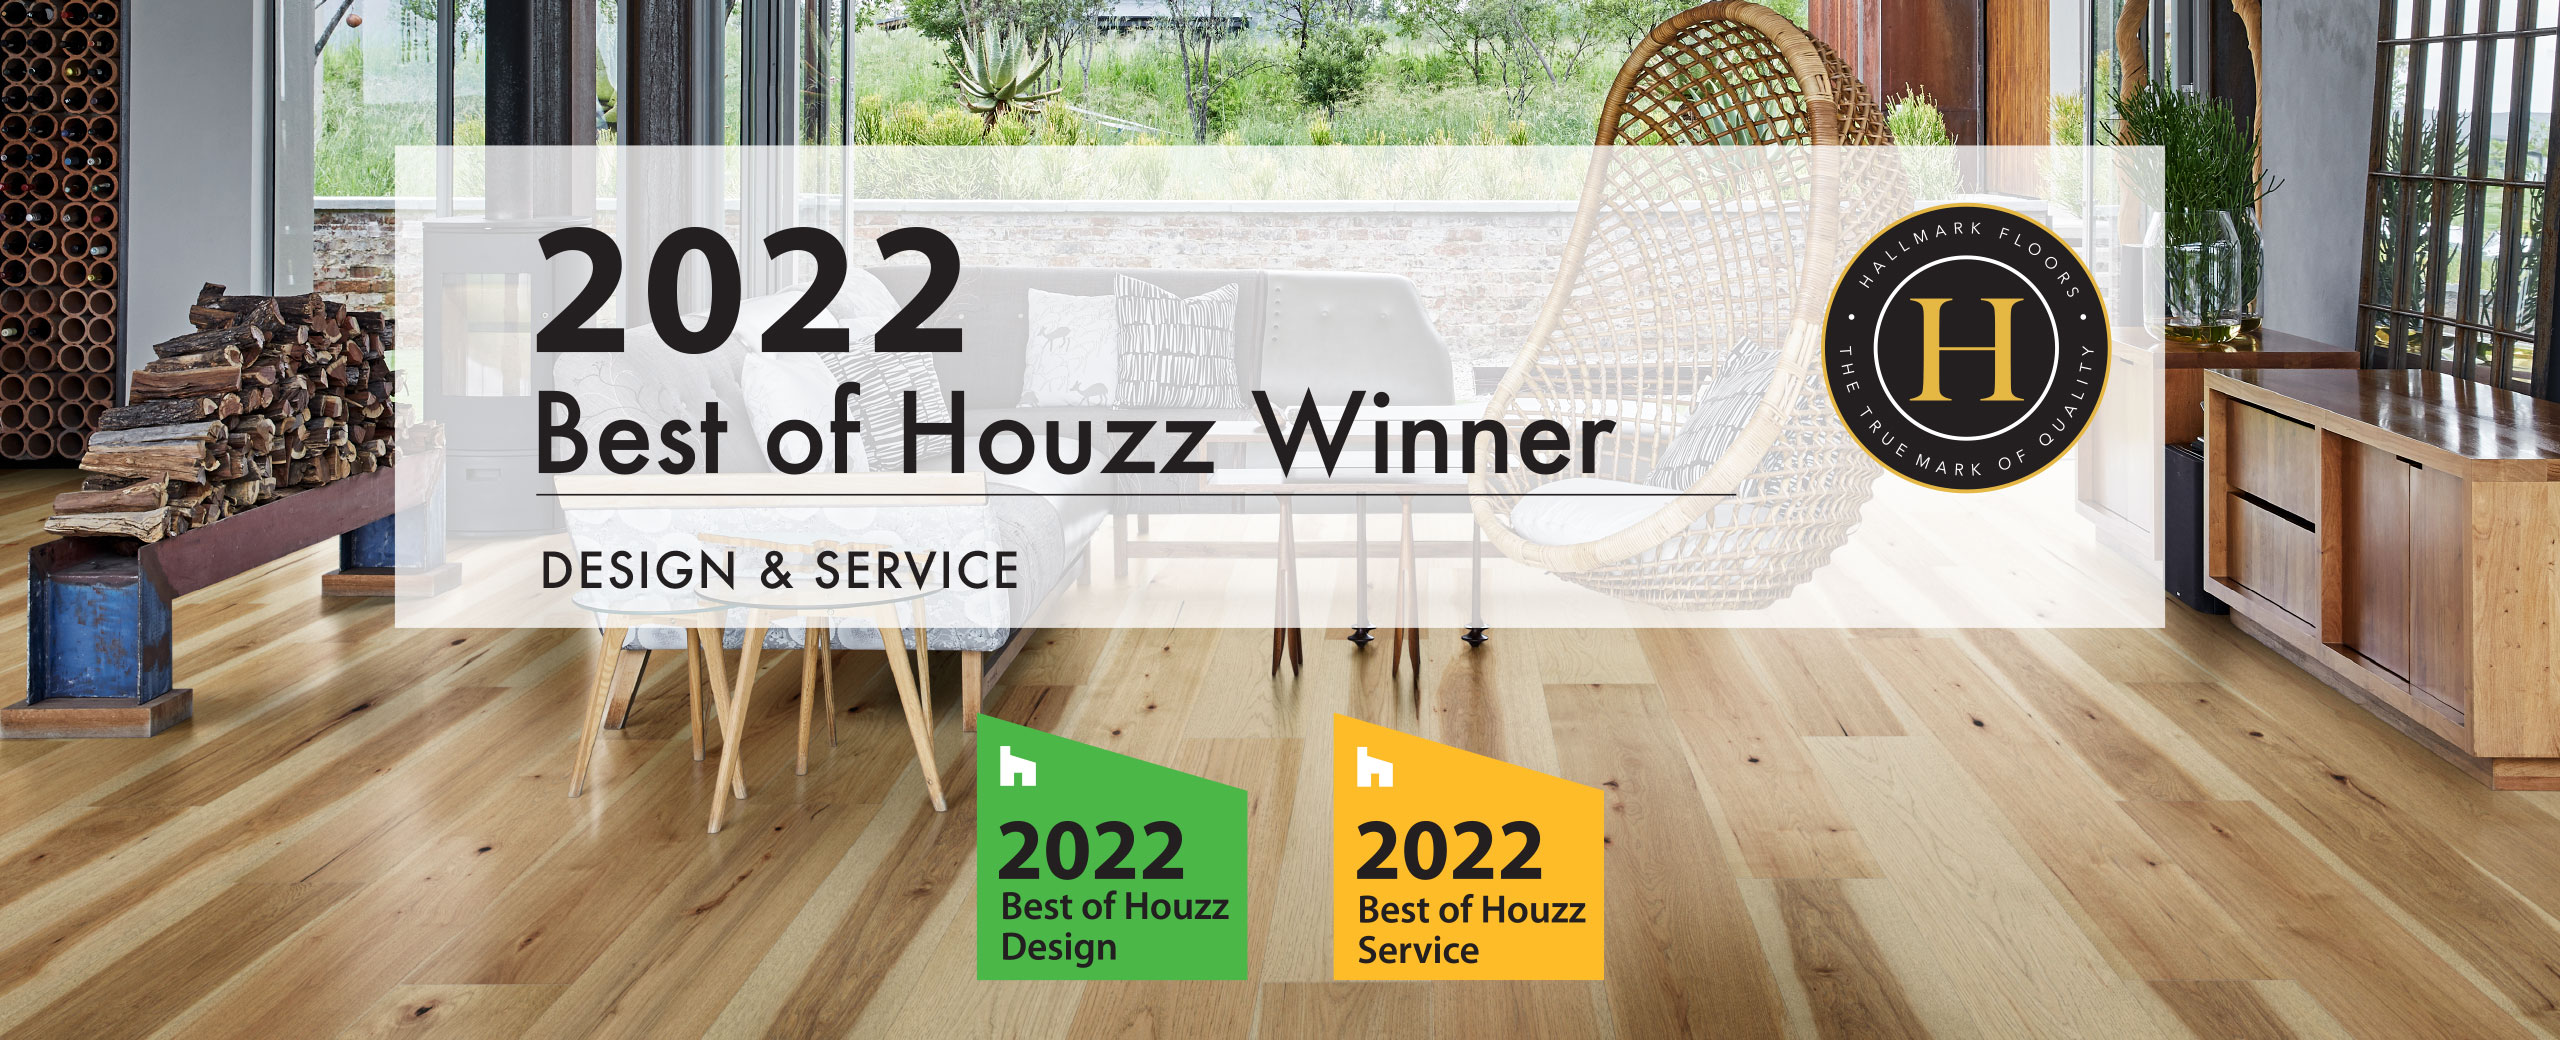 HF 2022 best of Houzz